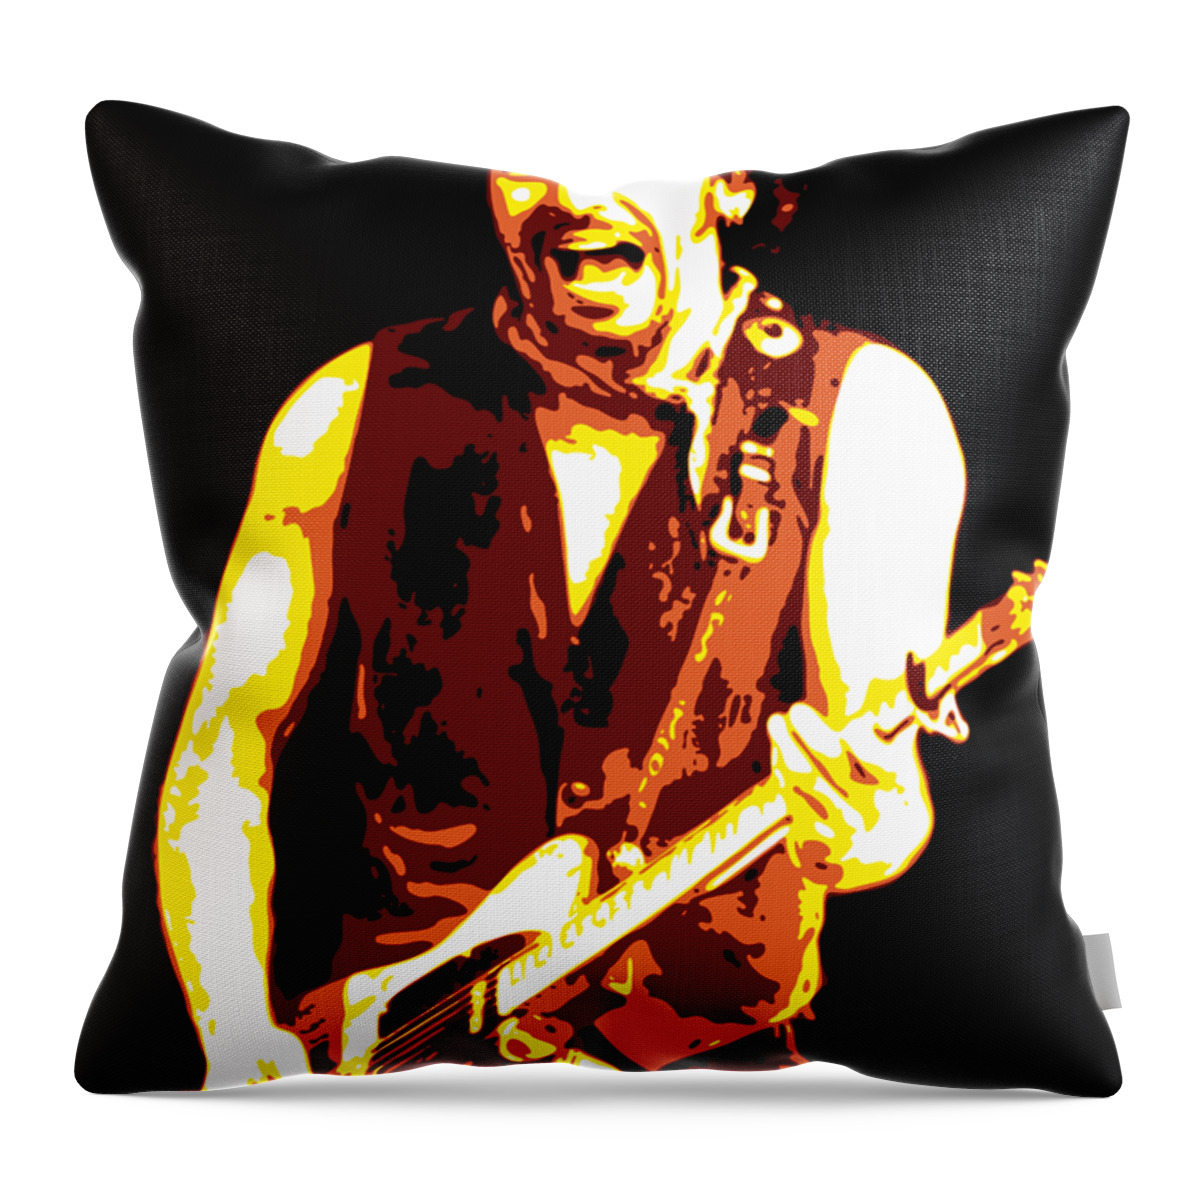 Bruce Springsteen Throw Pillow featuring the digital art Bruce Springsteen by DB Artist